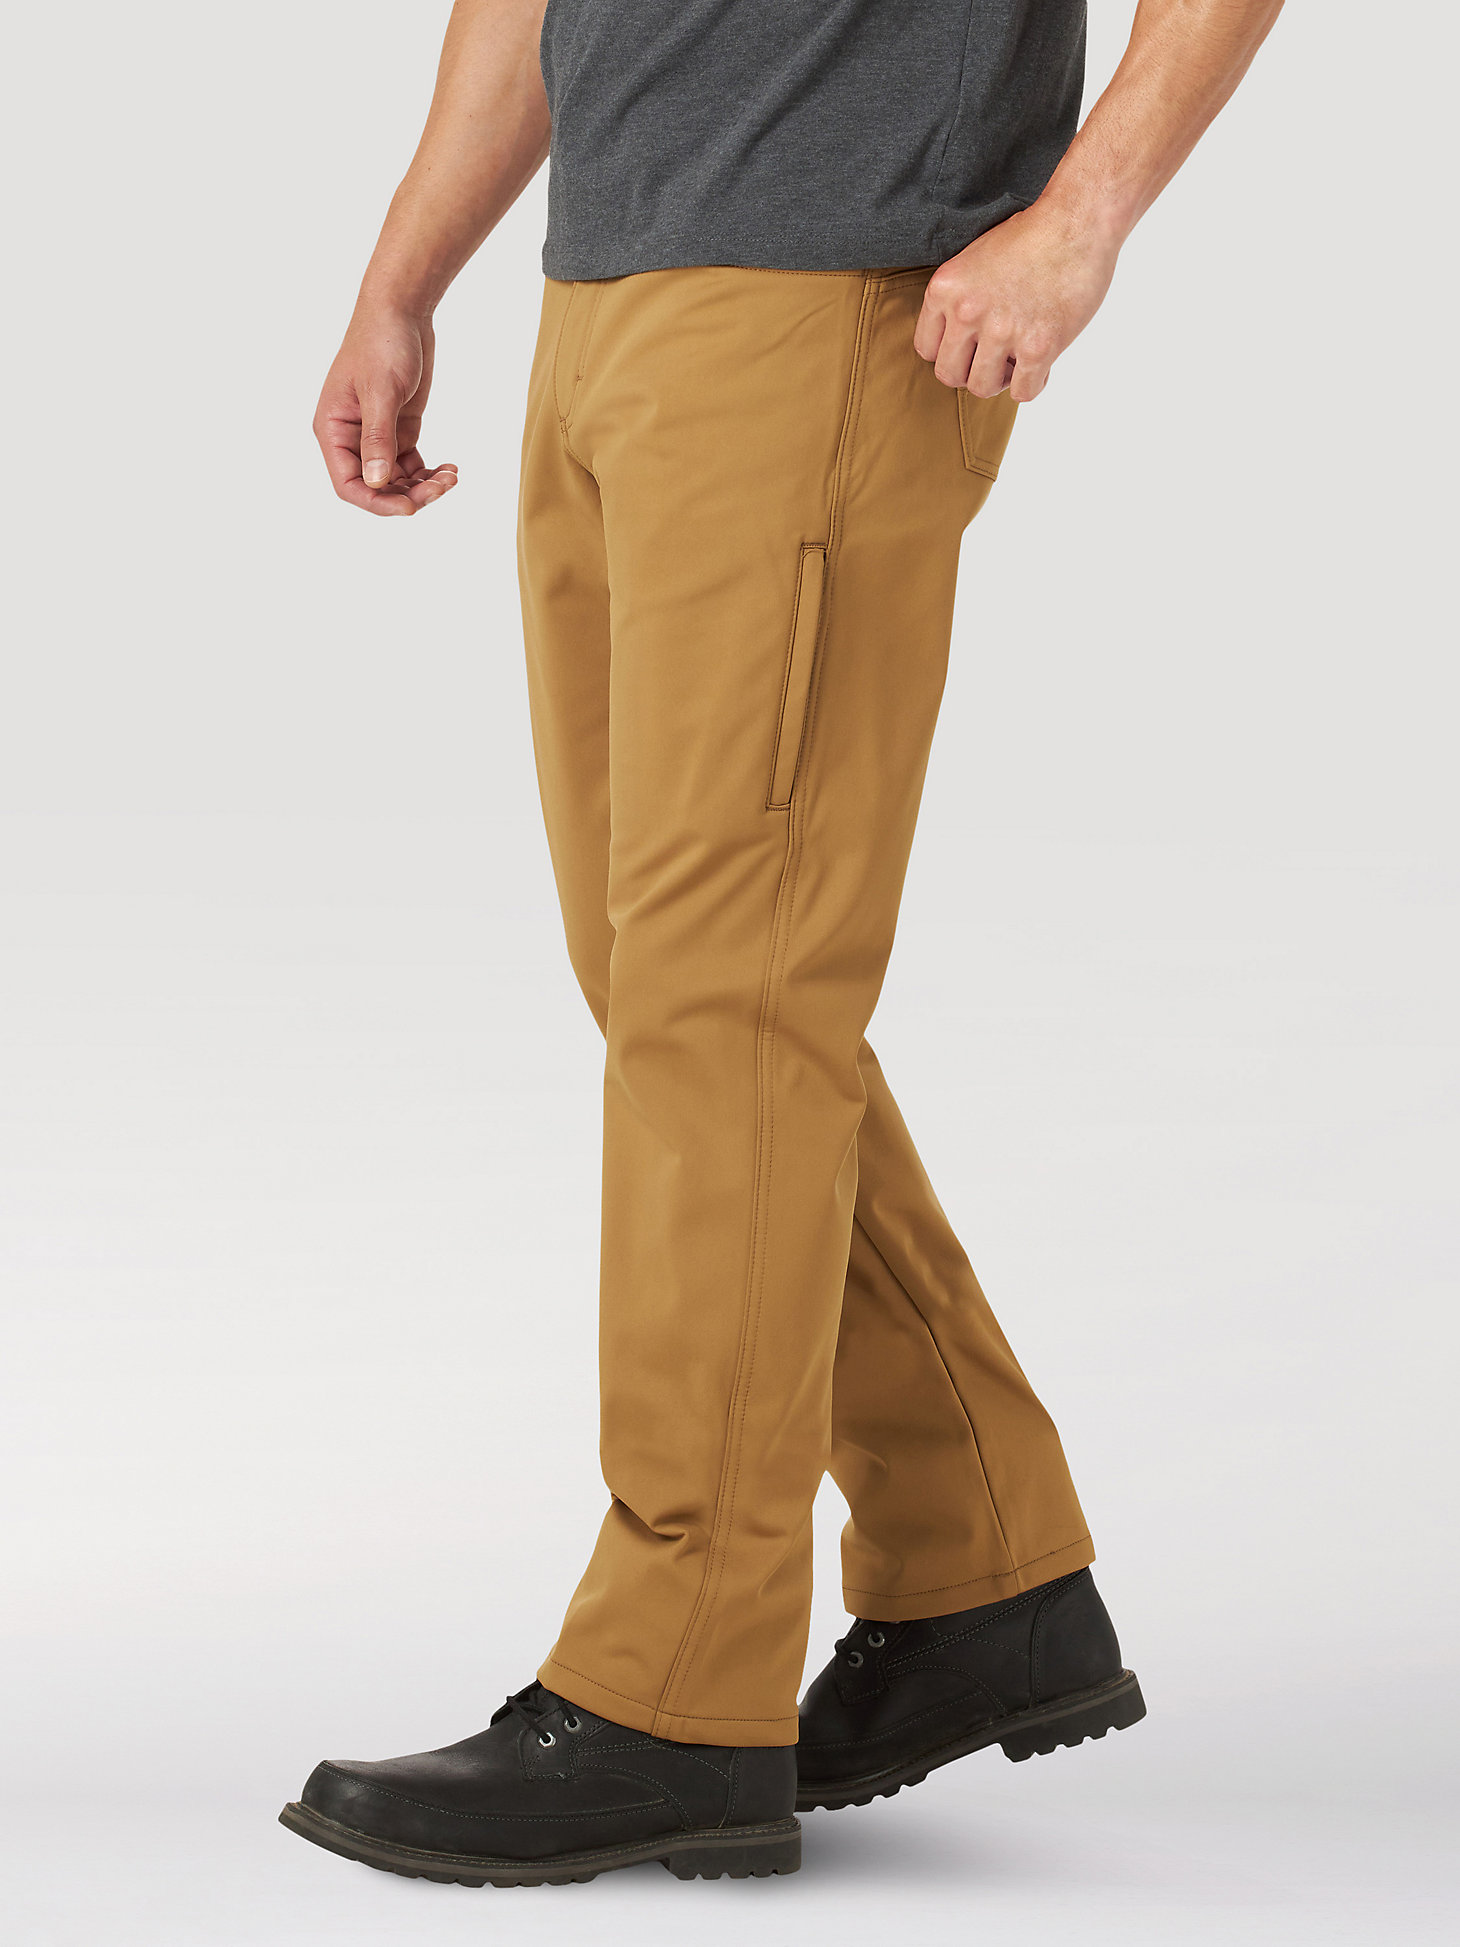 Men's Wrangler® Outdoor Single Layer Warming Pant in Ermine alternative view 2